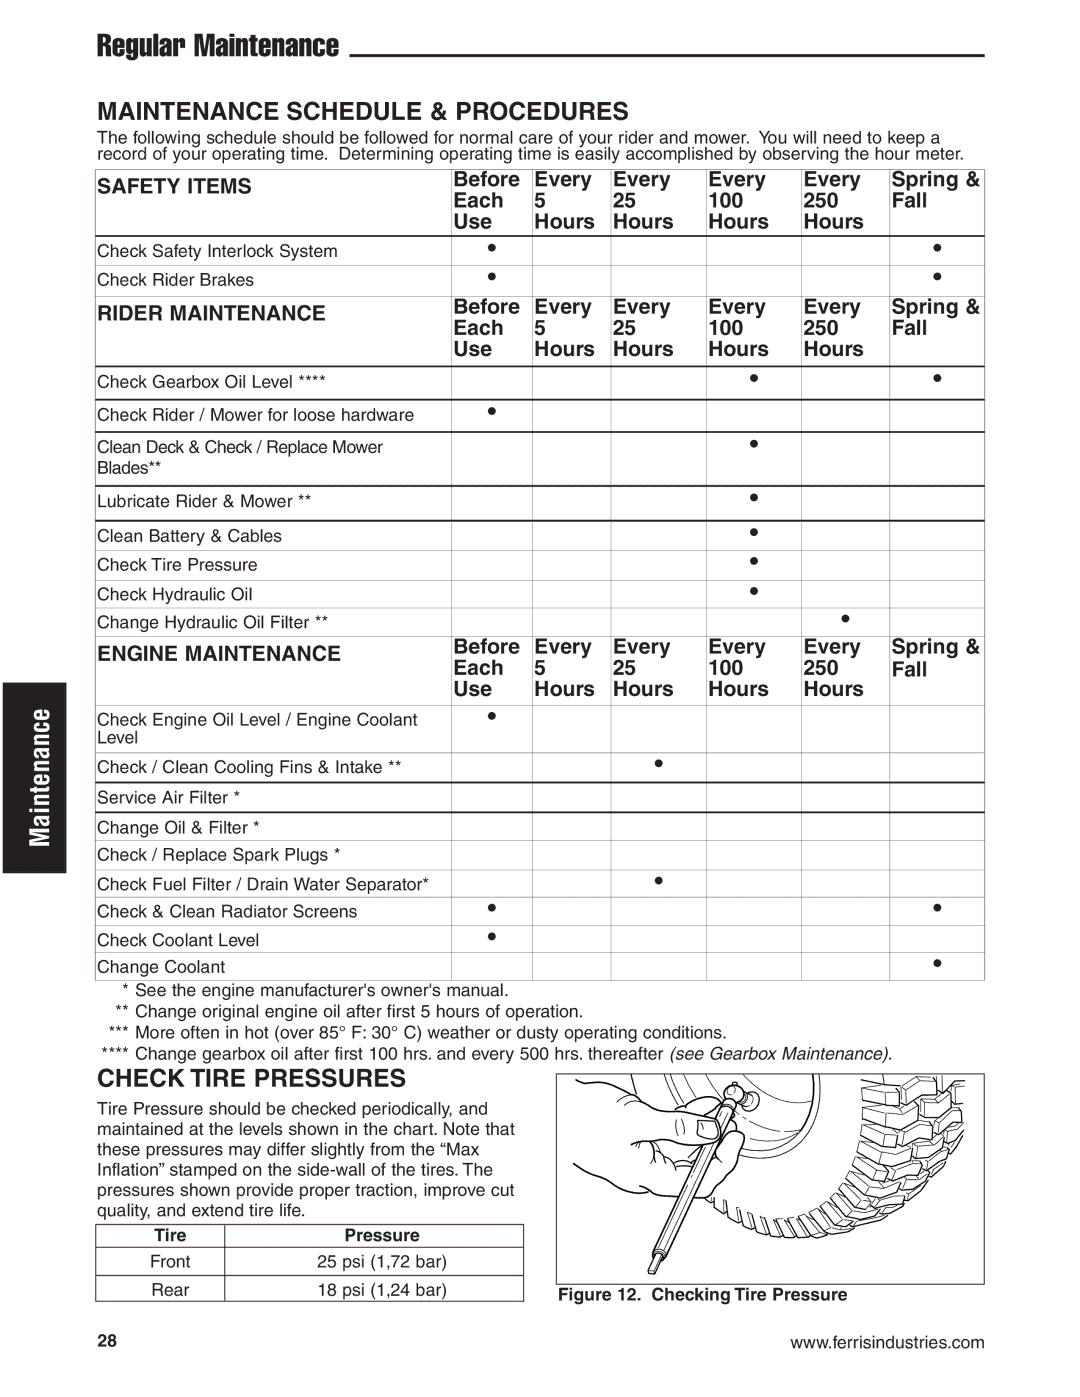 Briggs & Stratton 5900619 manual Regular Maintenance, Maintenance Schedule & Procedures, Check Tire Pressures 